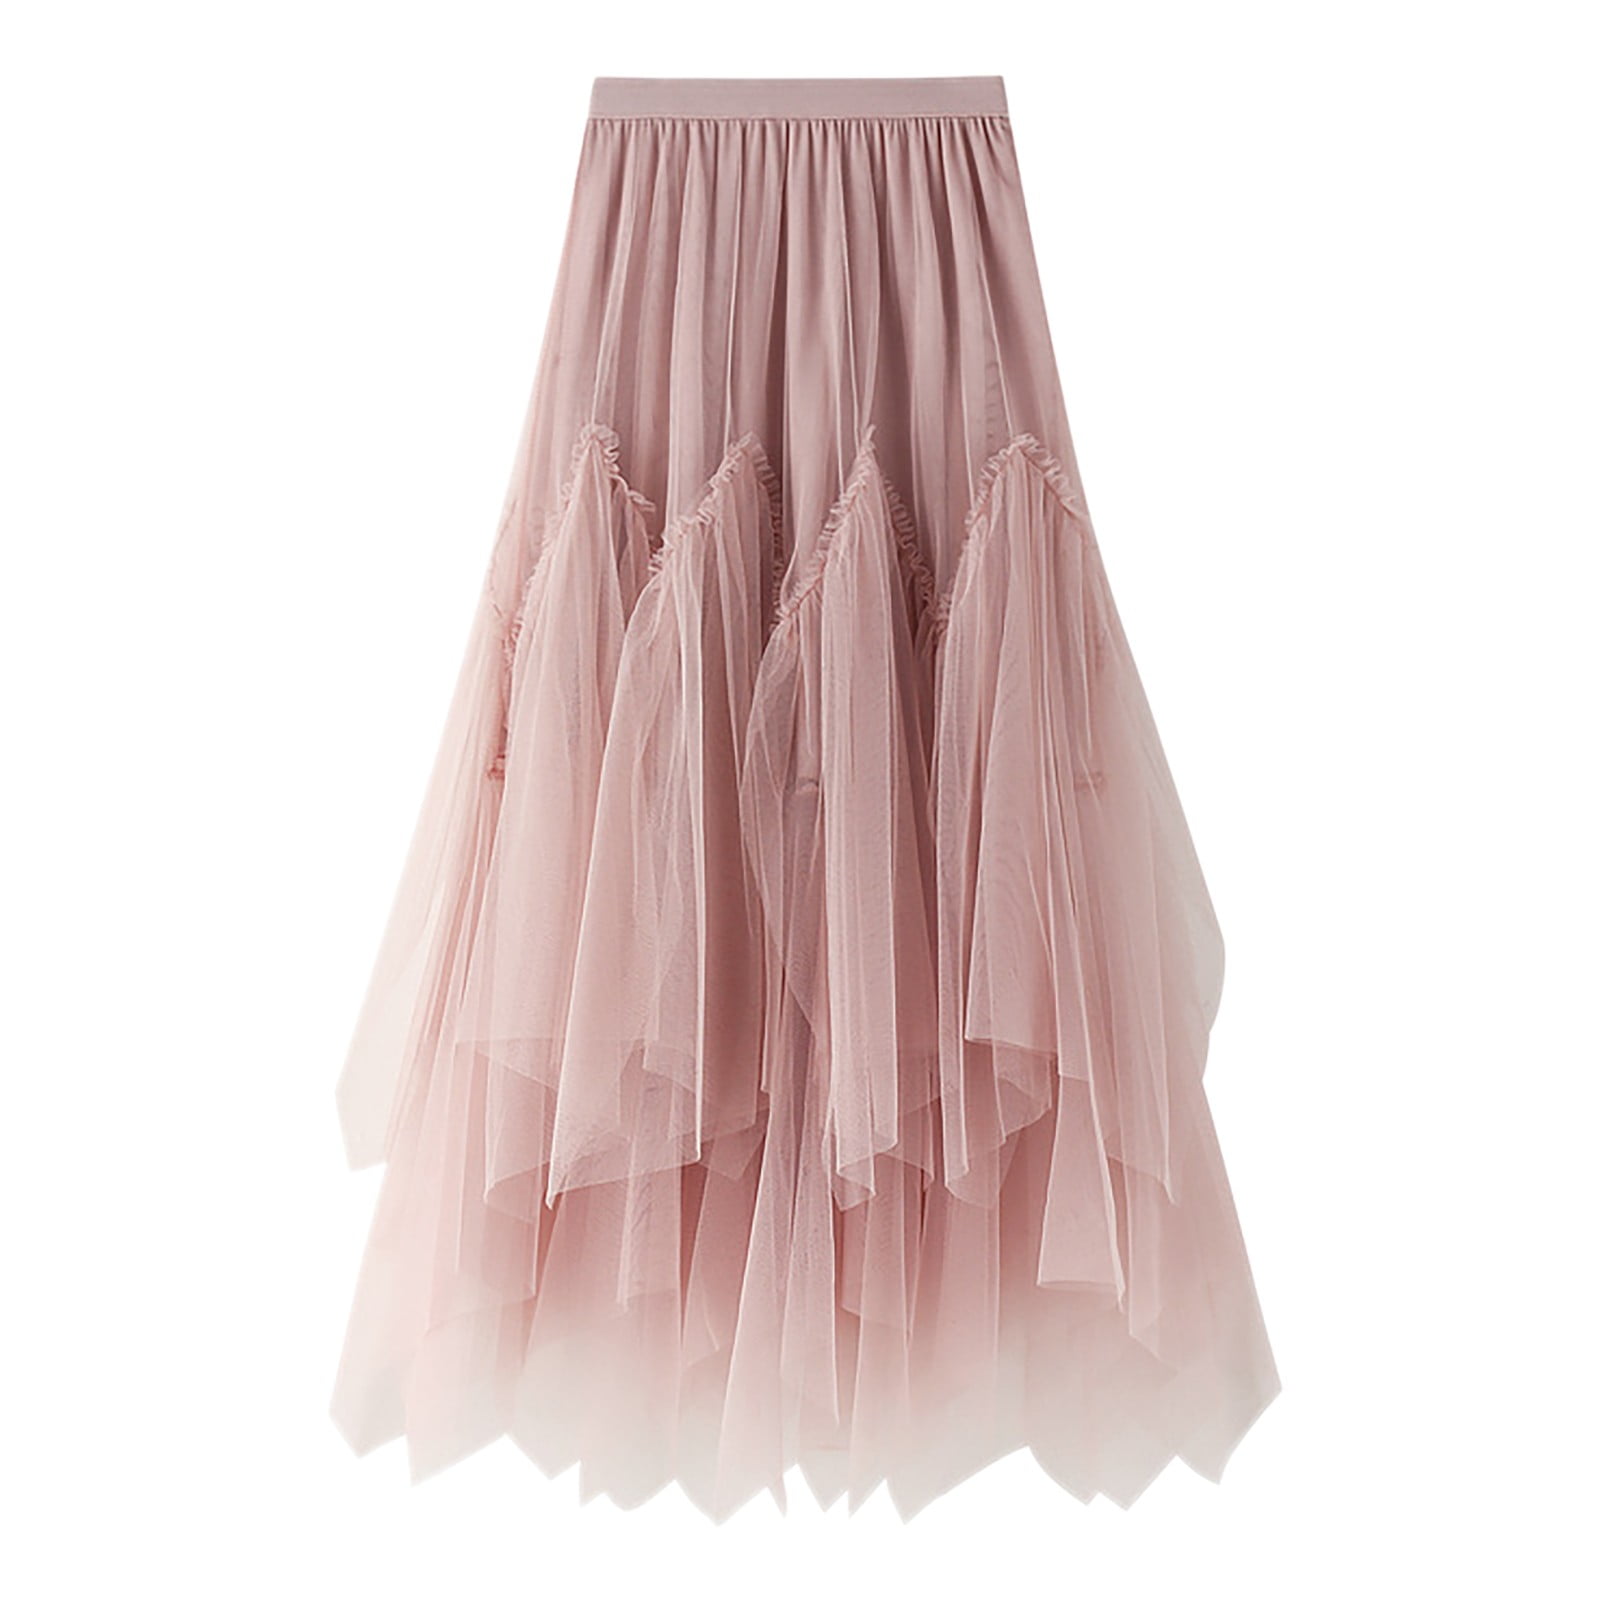 MIASHUI Summer Skirts Women's A Line Fairy Elastic Waist Tulle Midi ...